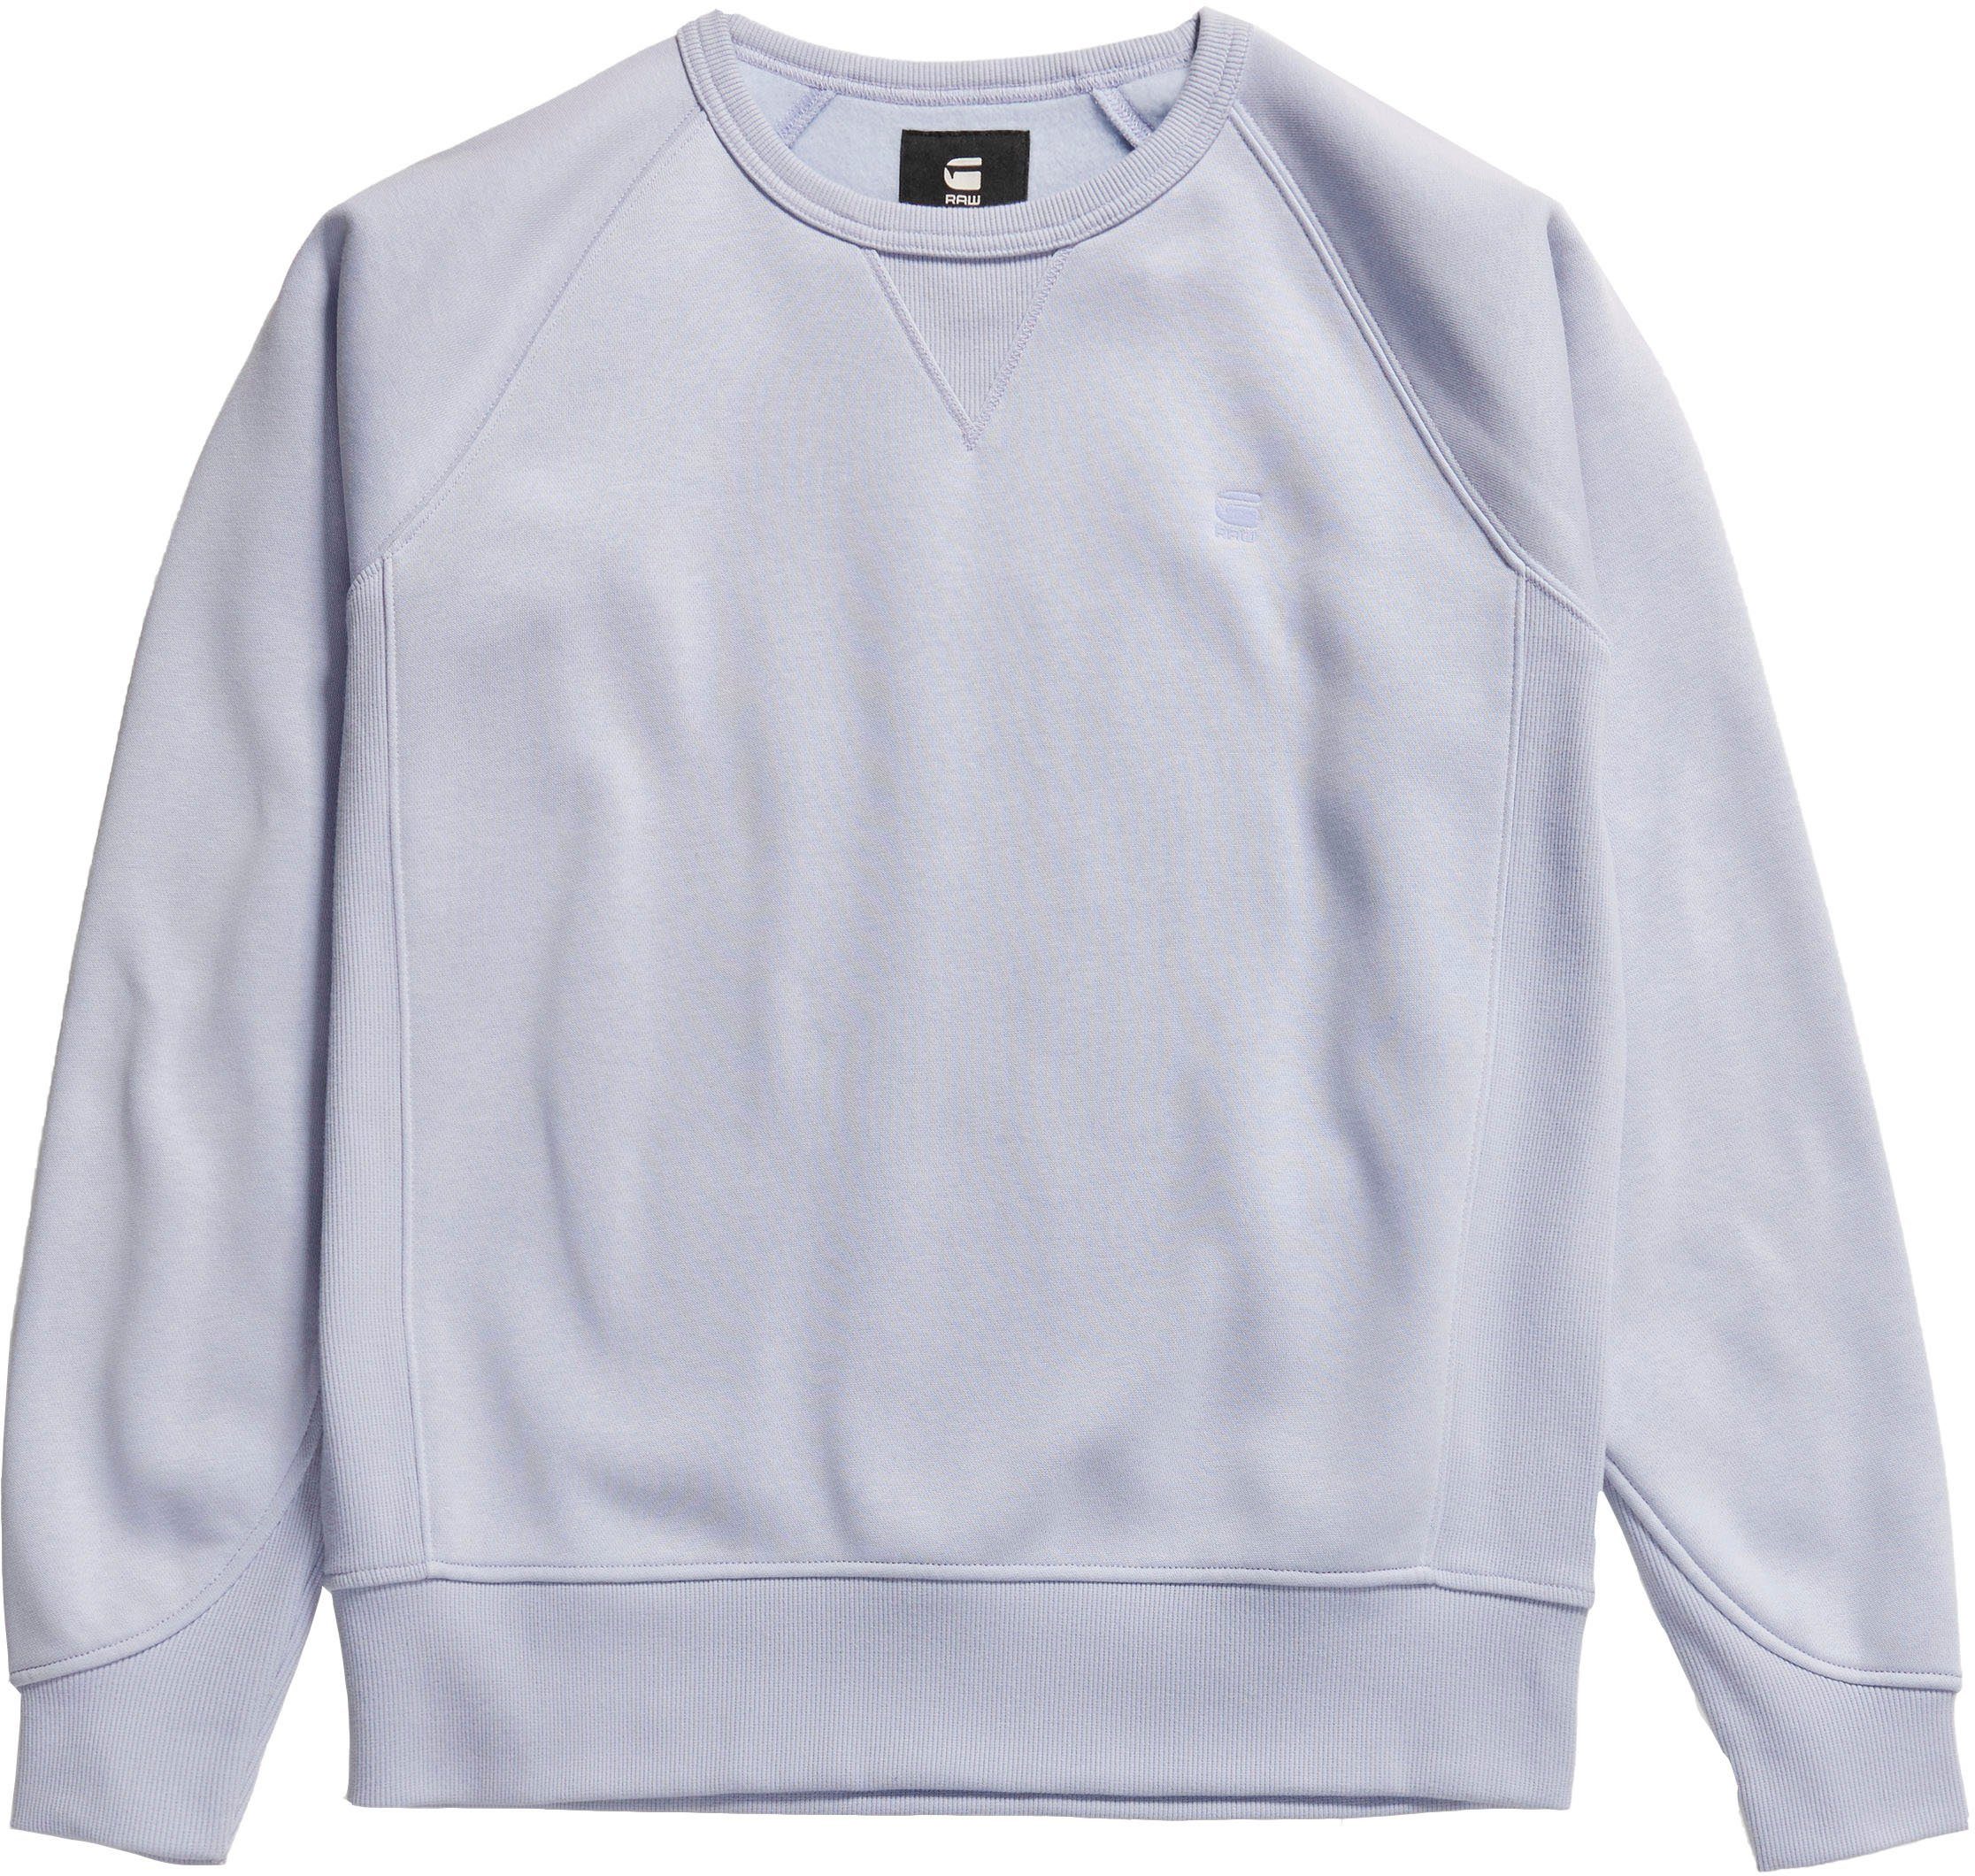 icelandic Sweatshirt Premium blue 2.0 RAW G-Star core